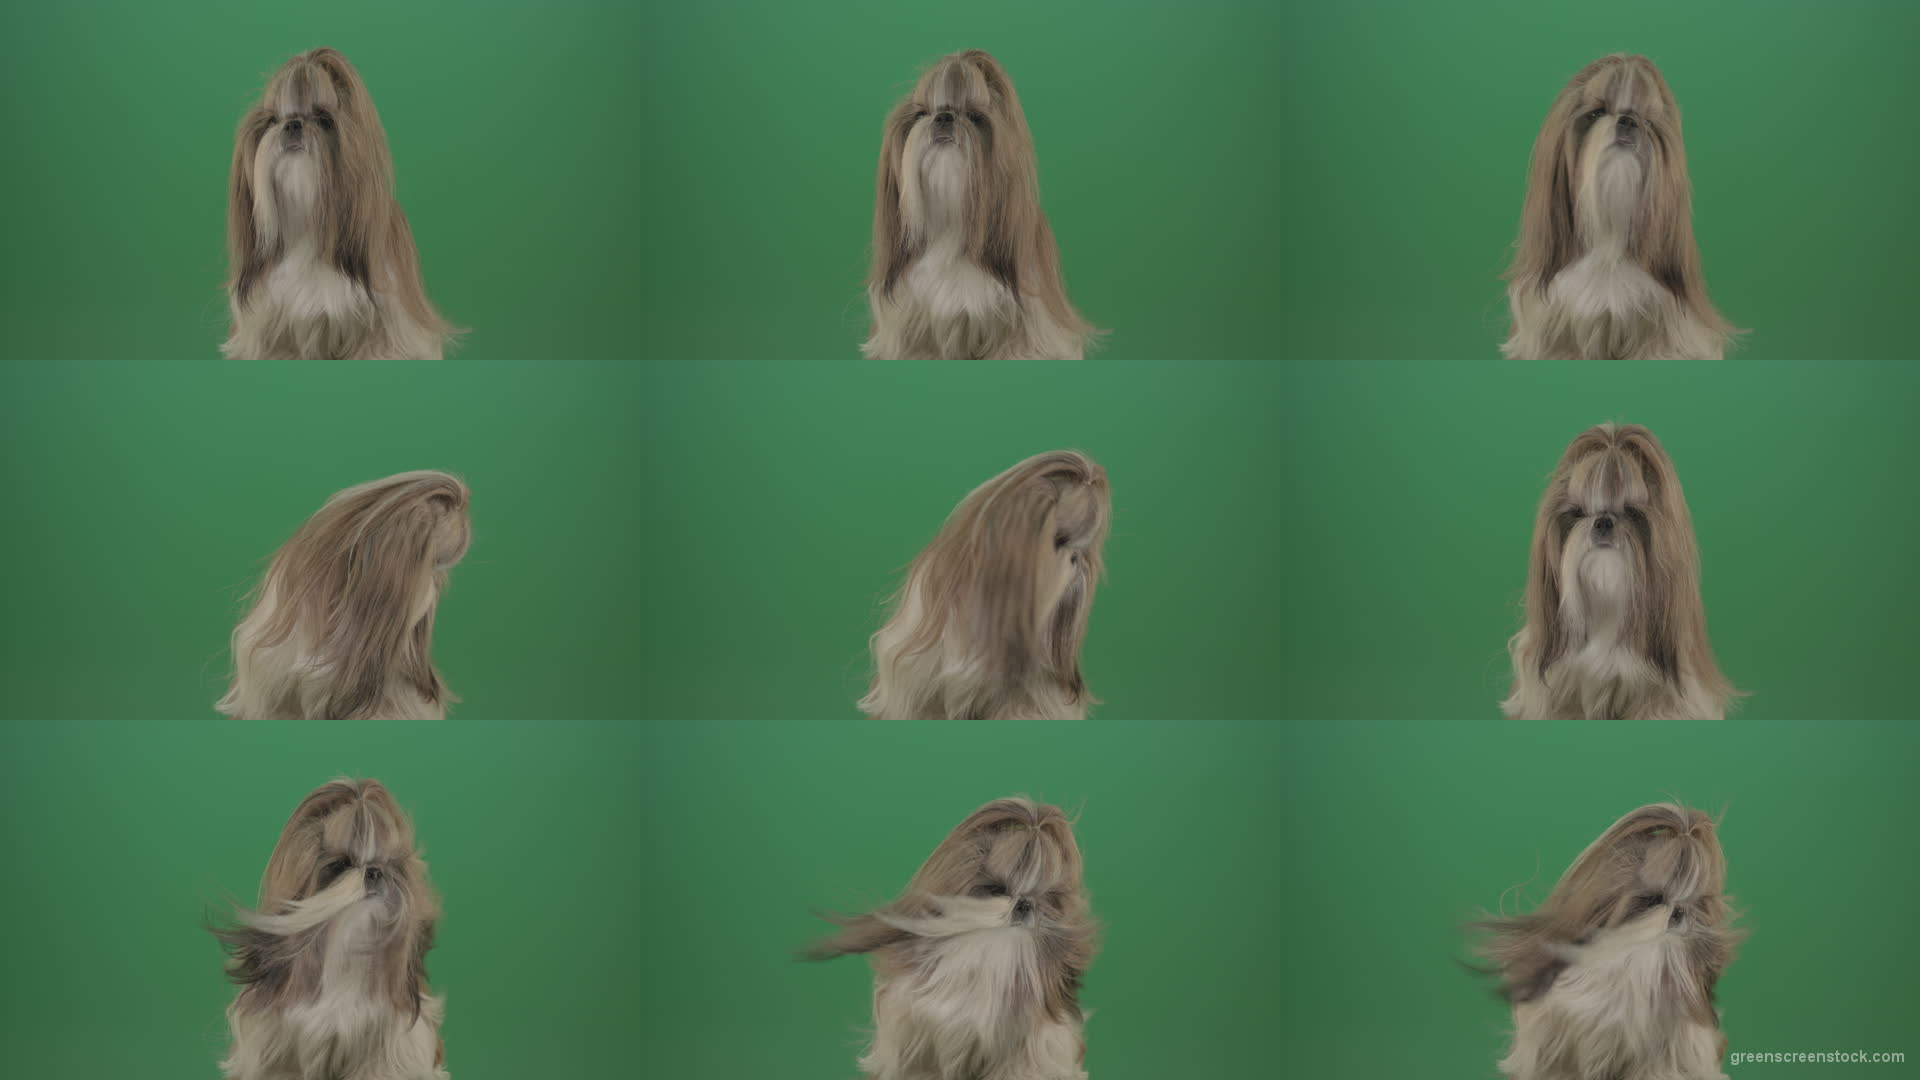 Green-Screen-Dog-Shih-Tzu-Small-toy-puppy-chewbacca-friend-isolated-on-green-screen Green Screen Stock